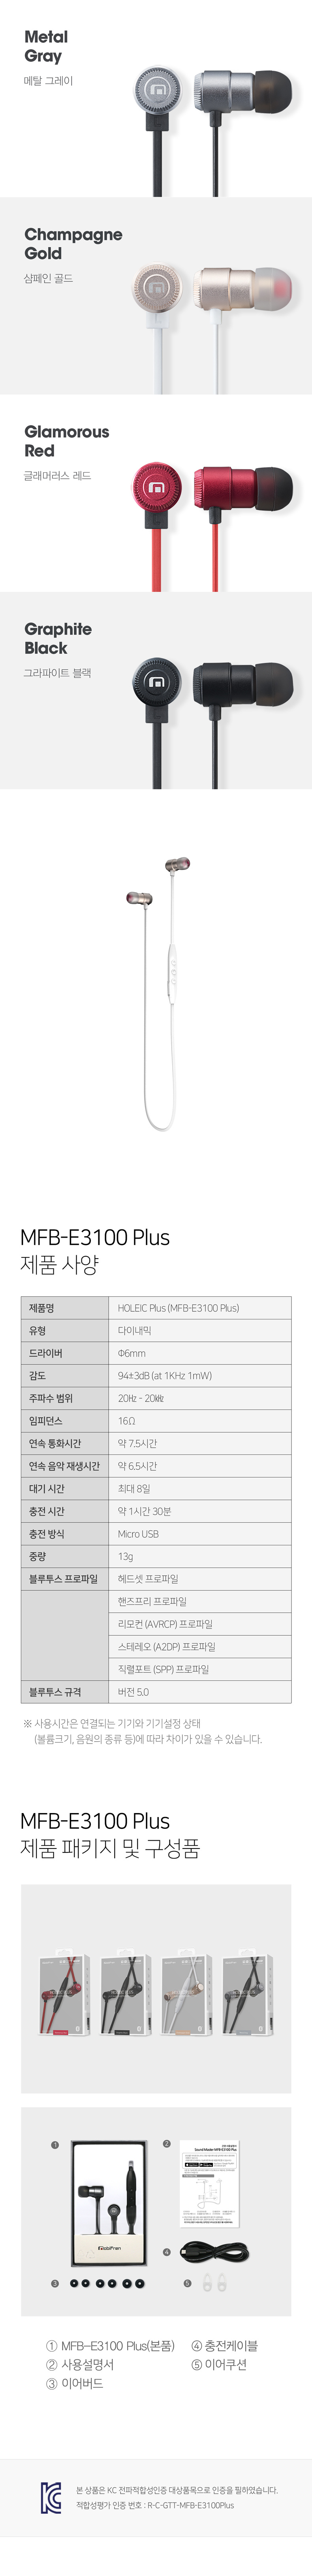 MFB-E3100Plus_info_s_790.jpg